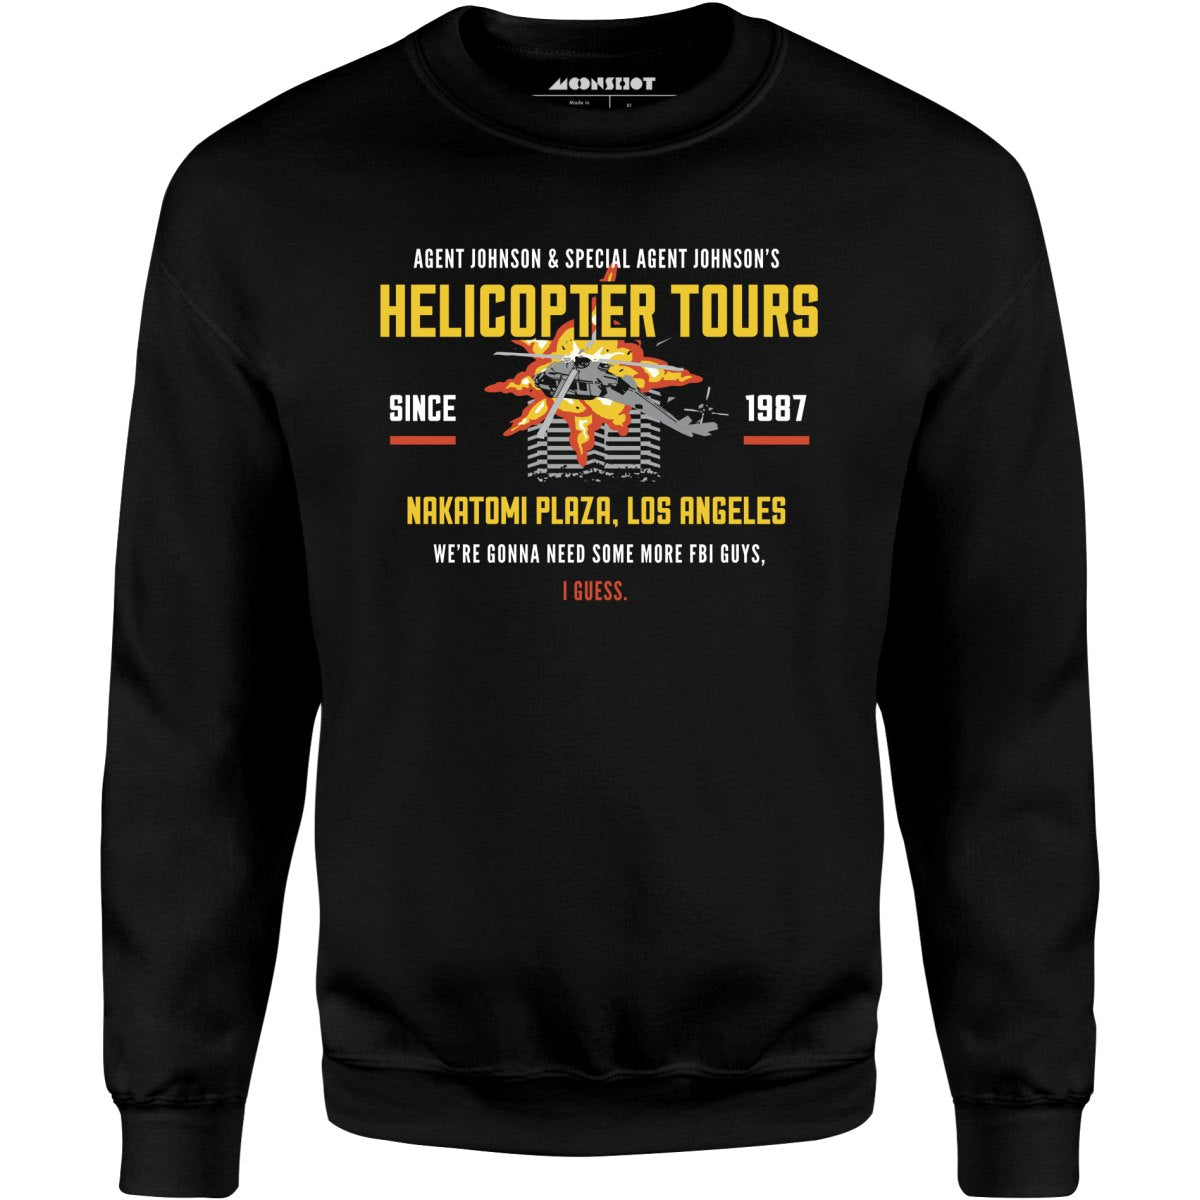 Agent Johnson & Johnson's Helicopter Tours - Die Hard - Unisex Sweatshirt